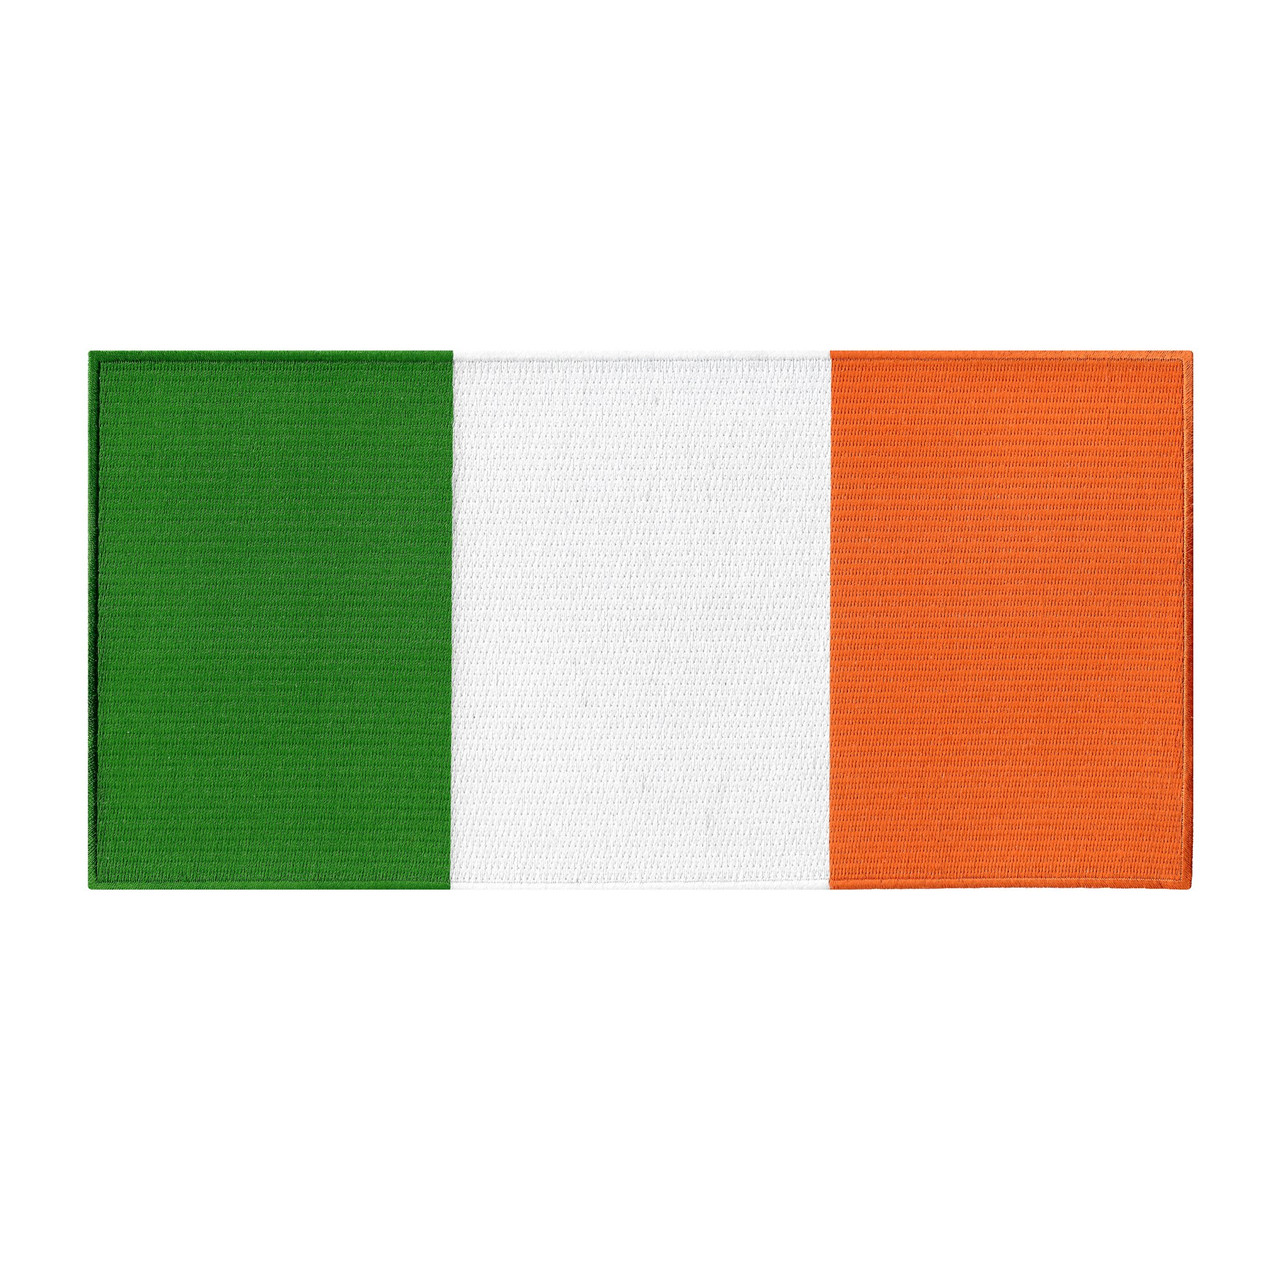 Iron-on denim patches (100mm x 150mm) - Sew Irish